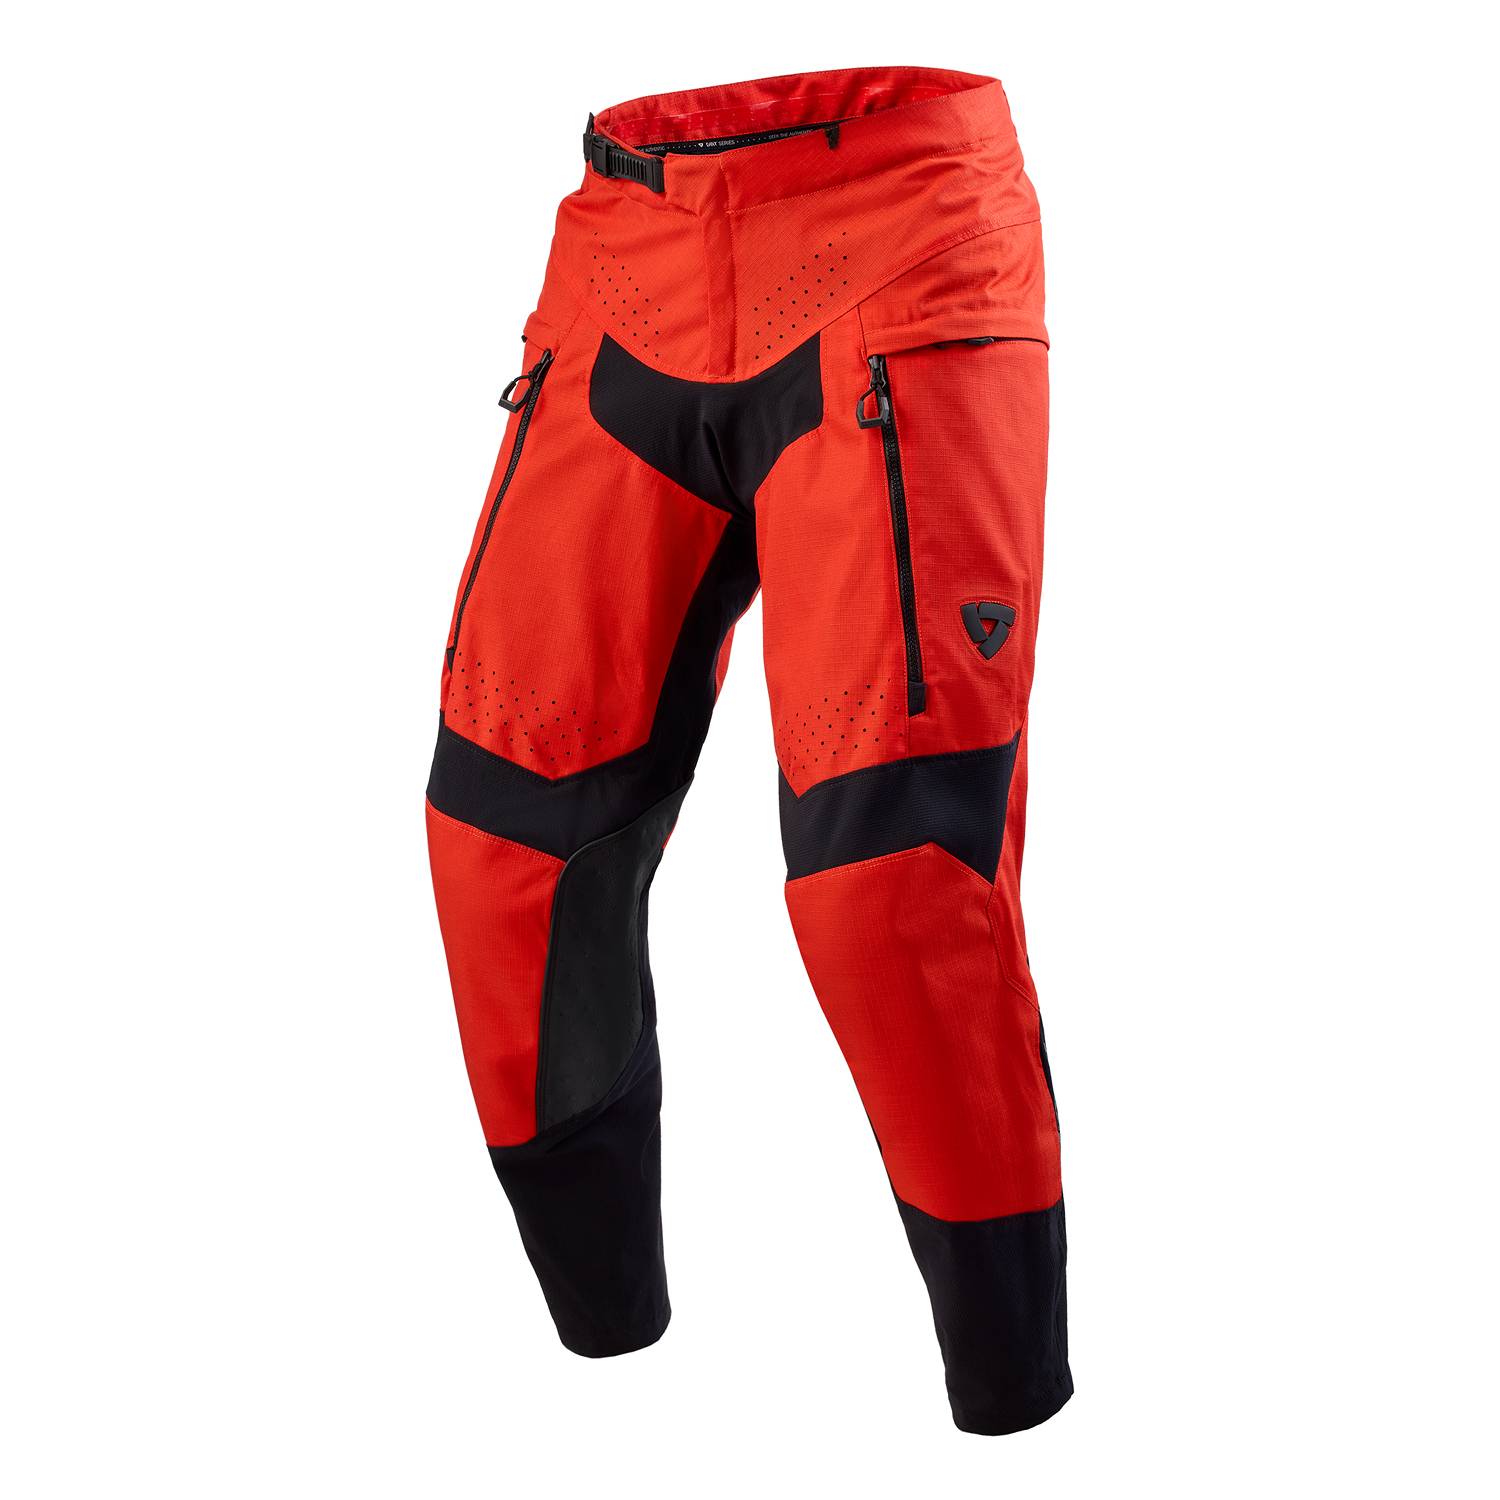 Image of REV'IT! Pants Peninsula Red Short Motorcycle Pants Size M ID 8700001349062